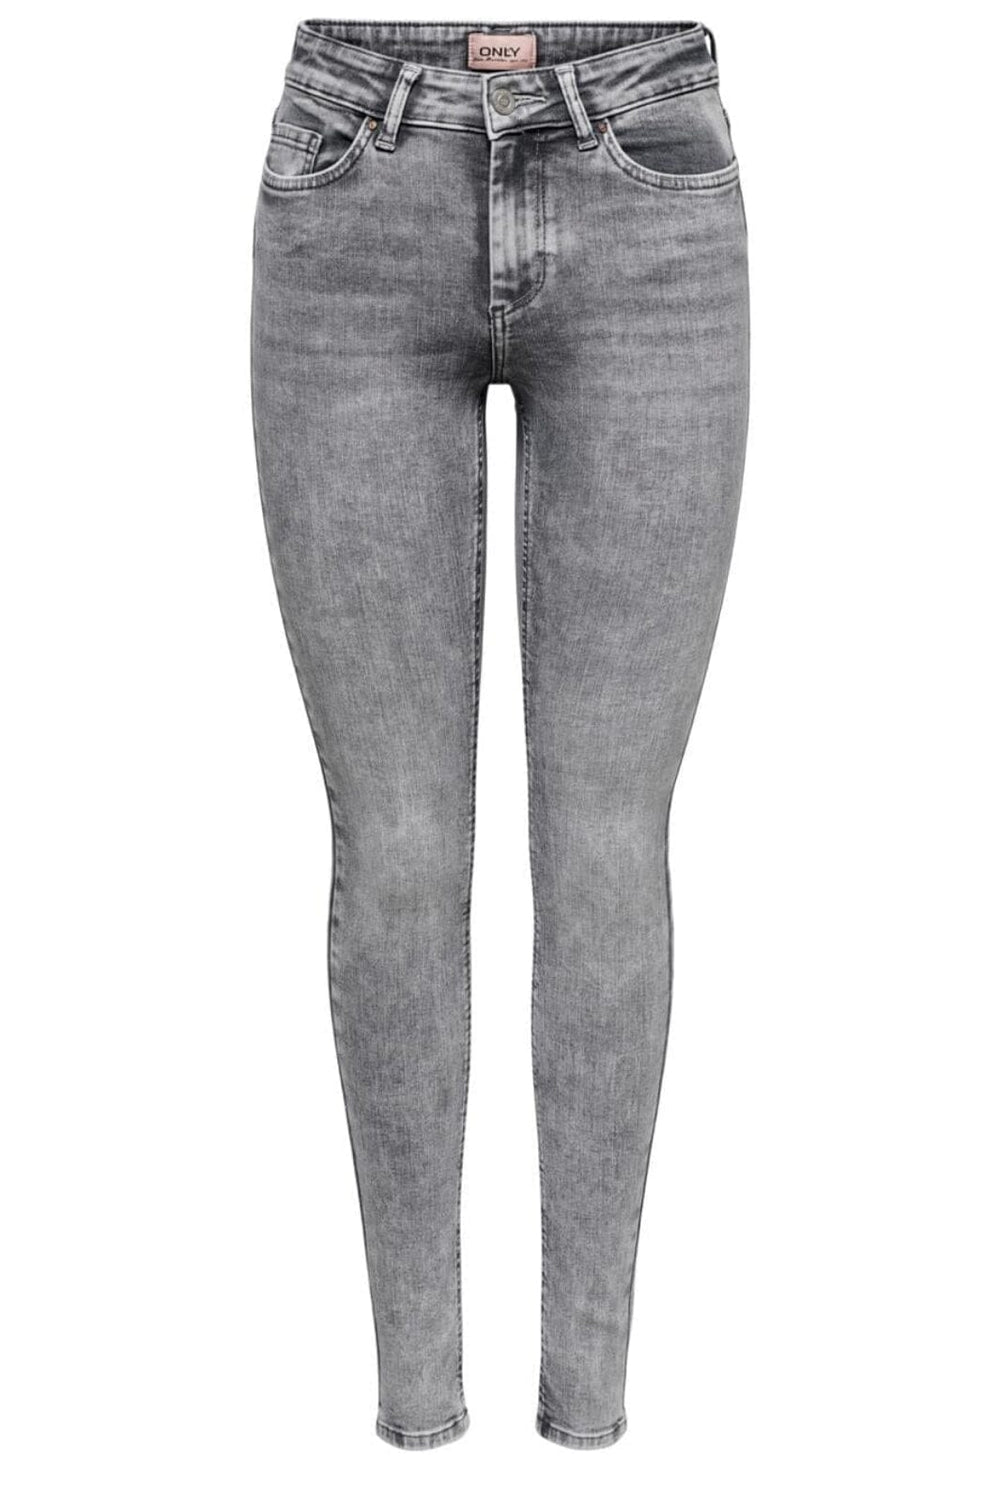 Only - Onlblush Mid Sk - 179689 Light Grey Denim Jeans 